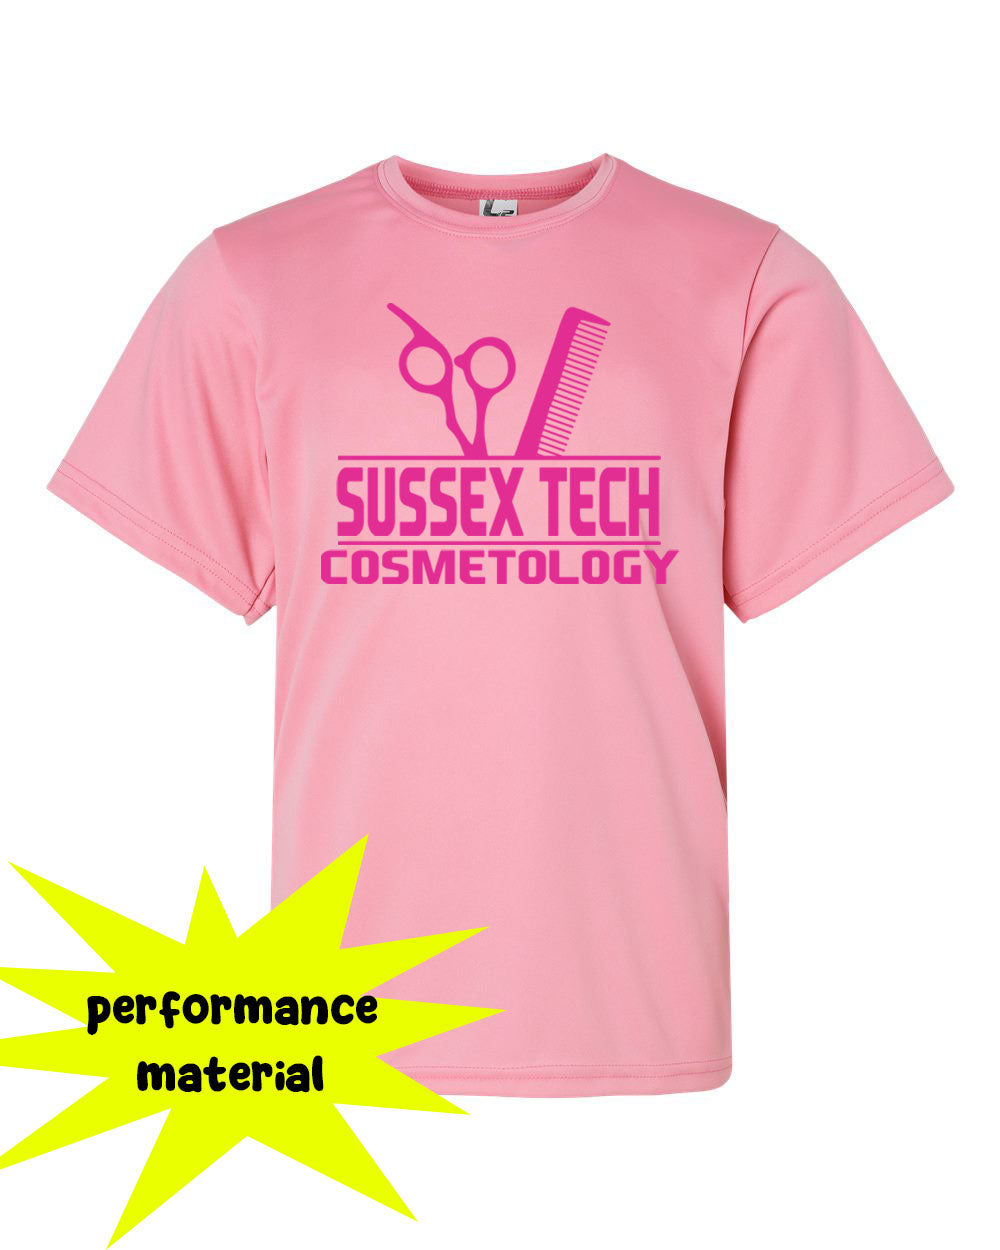 Senior Cosmetology Performance Material design 3 T-Shirt